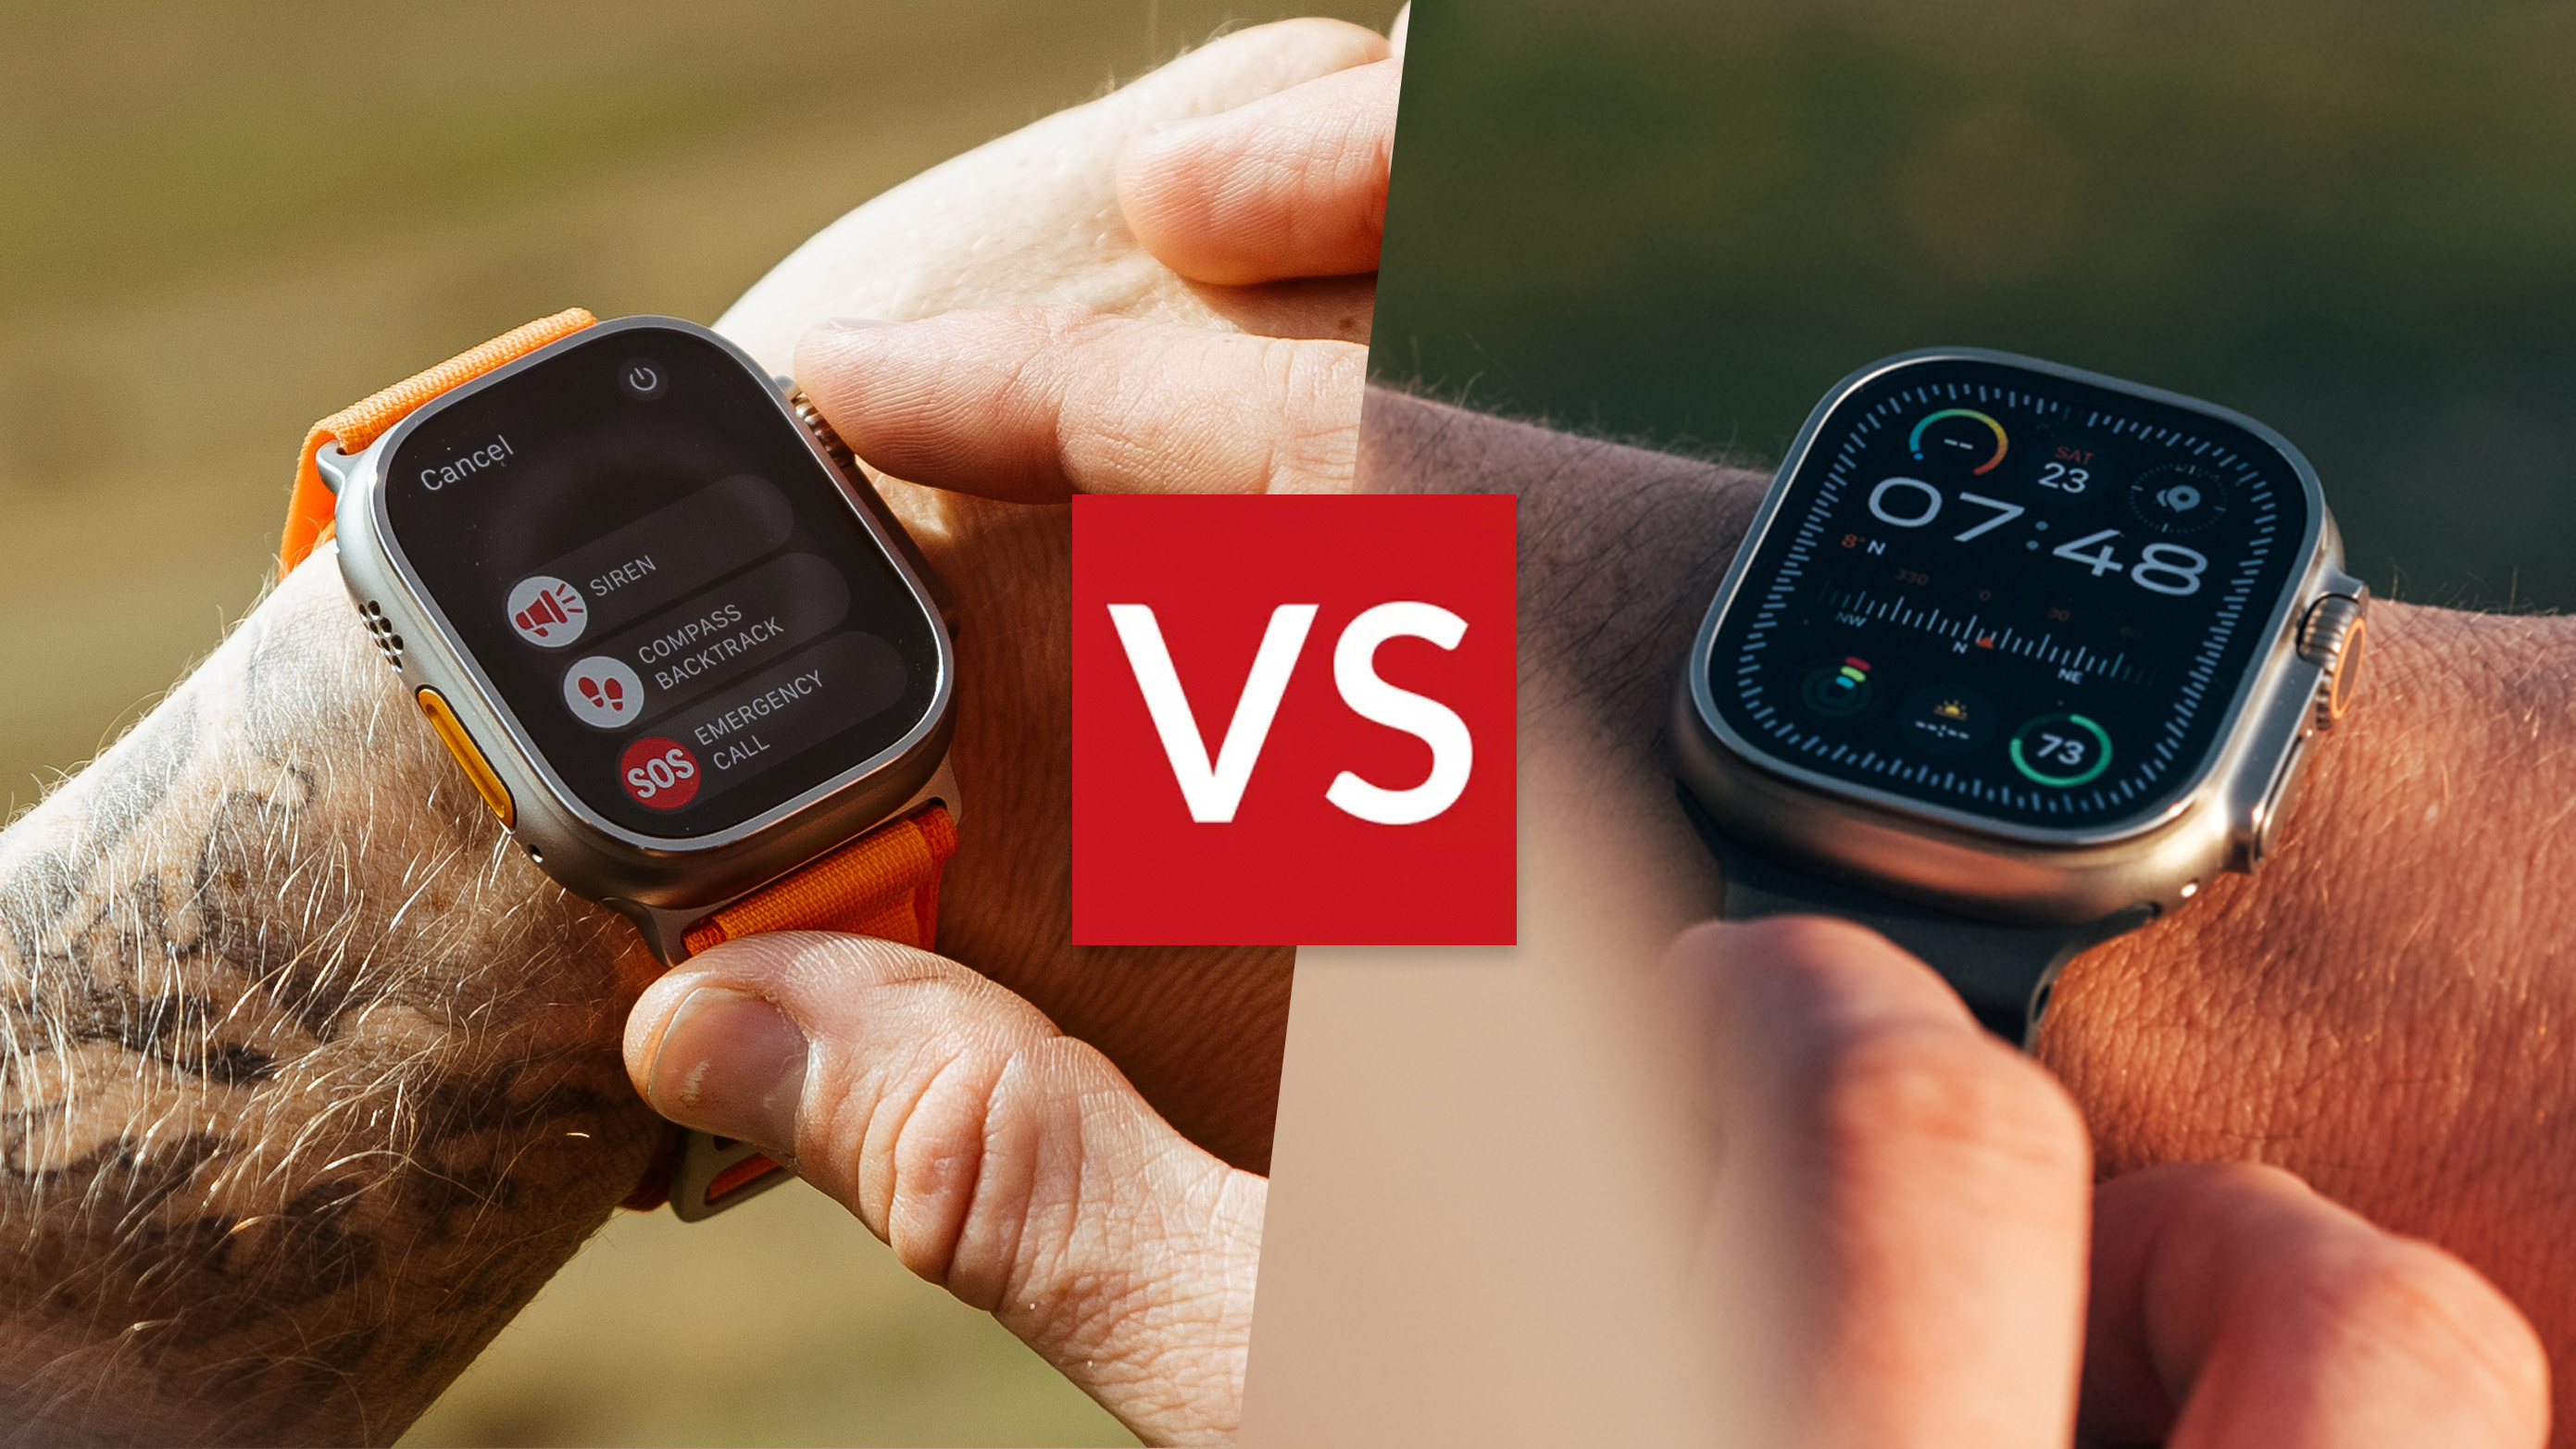 Comparativa Apple Watch Ultra vs Apple Watch Ultra 2